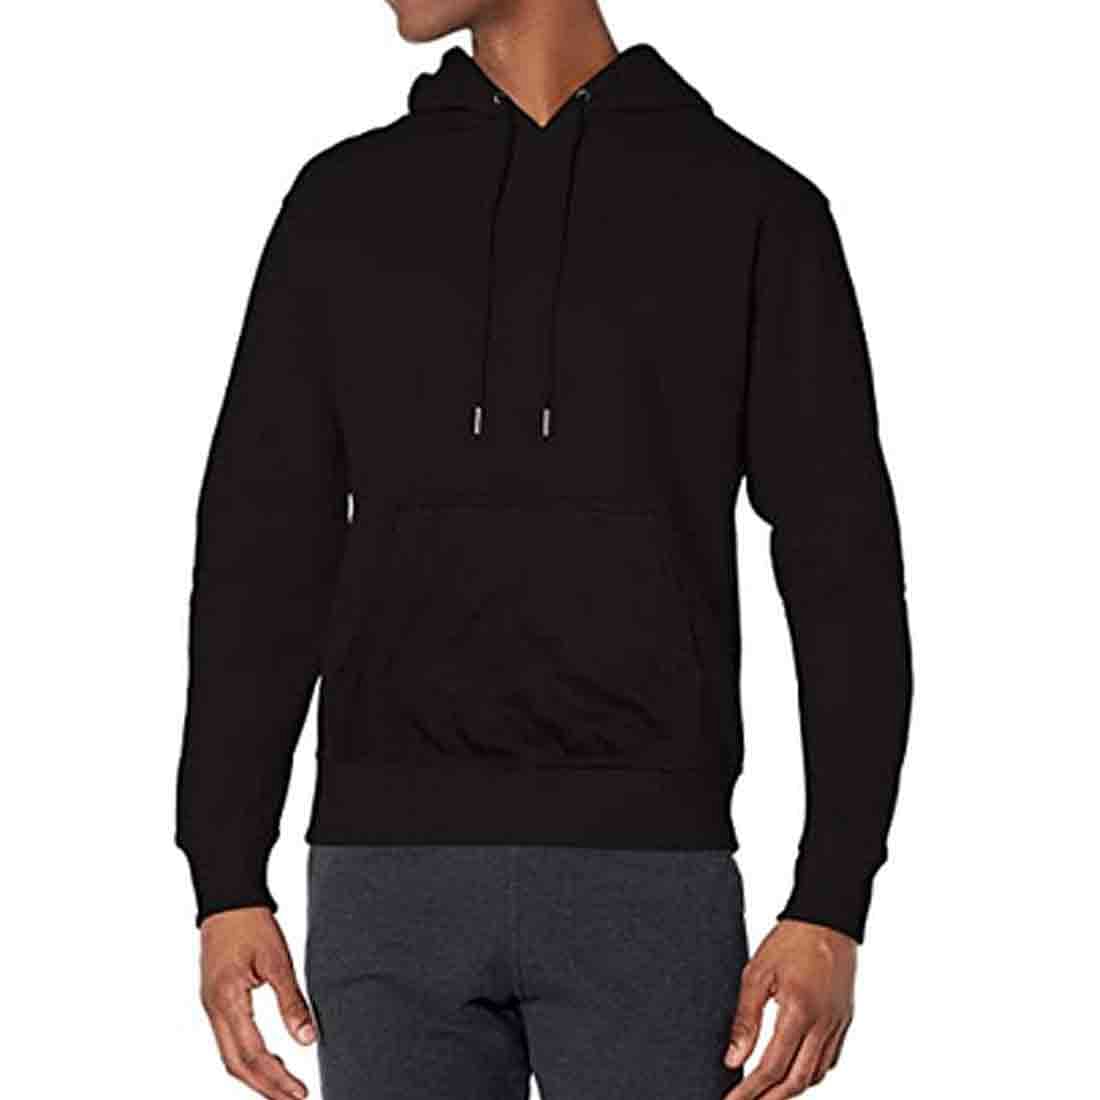 Nutcase stylish hoodie sweatshirt Unisex - Chill Nutcase